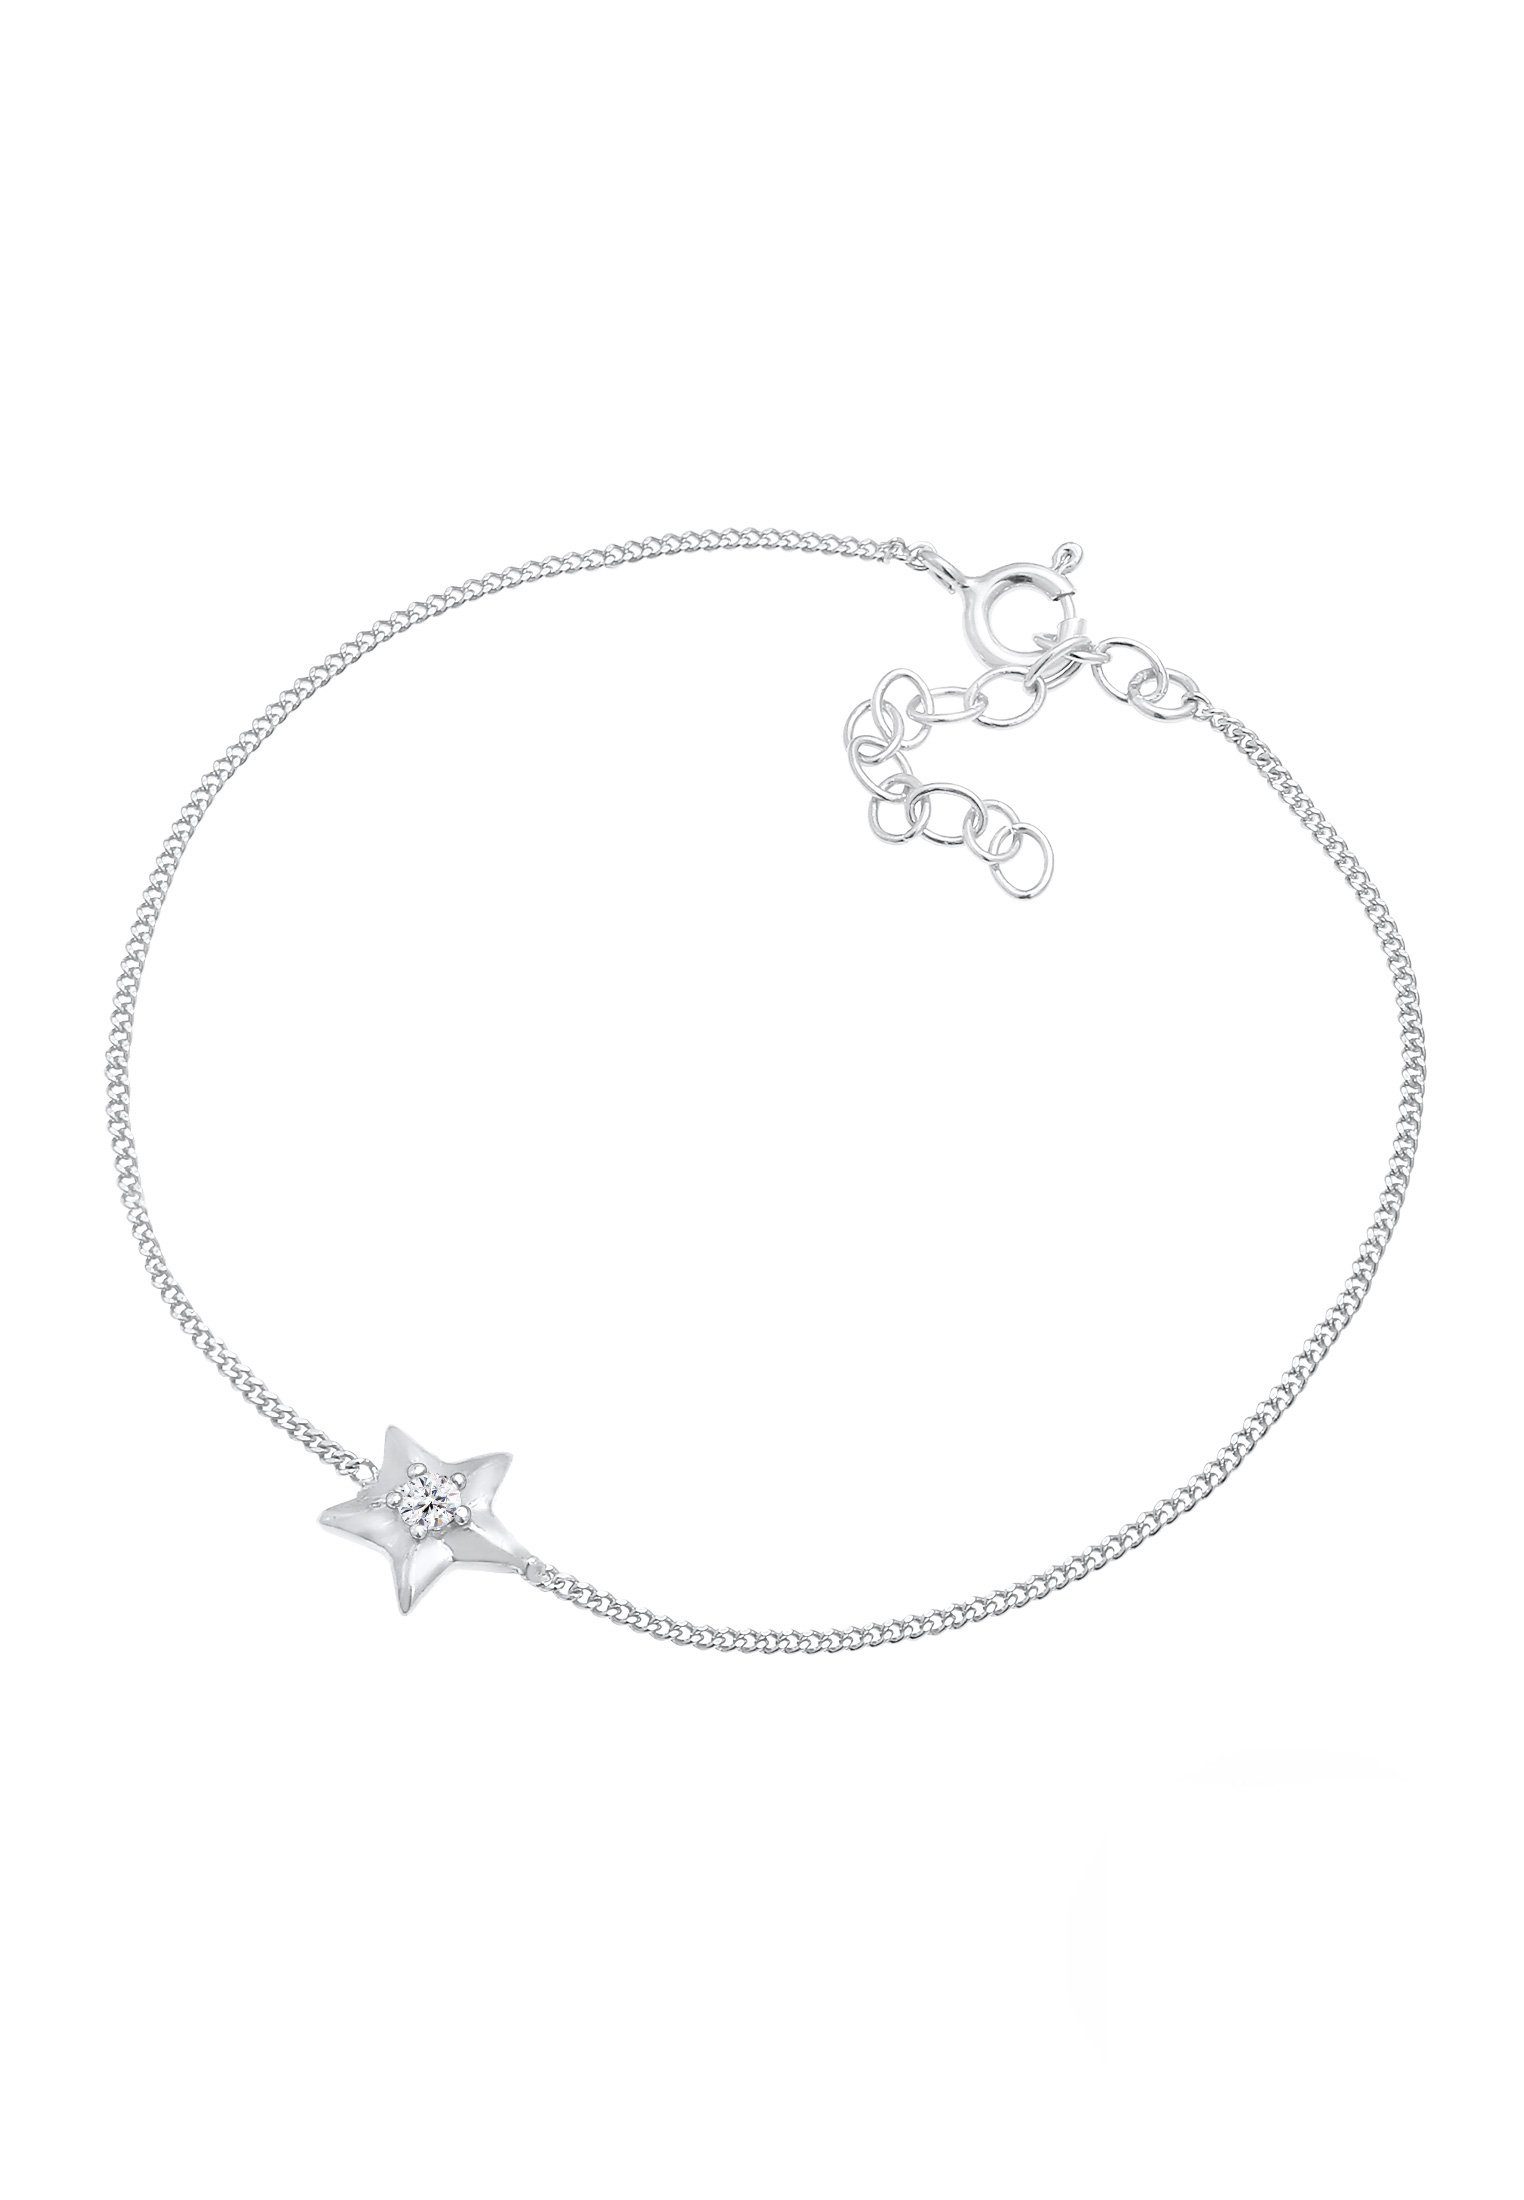 Kristalle Stern Astro Armband Elli 925 Silber, Star